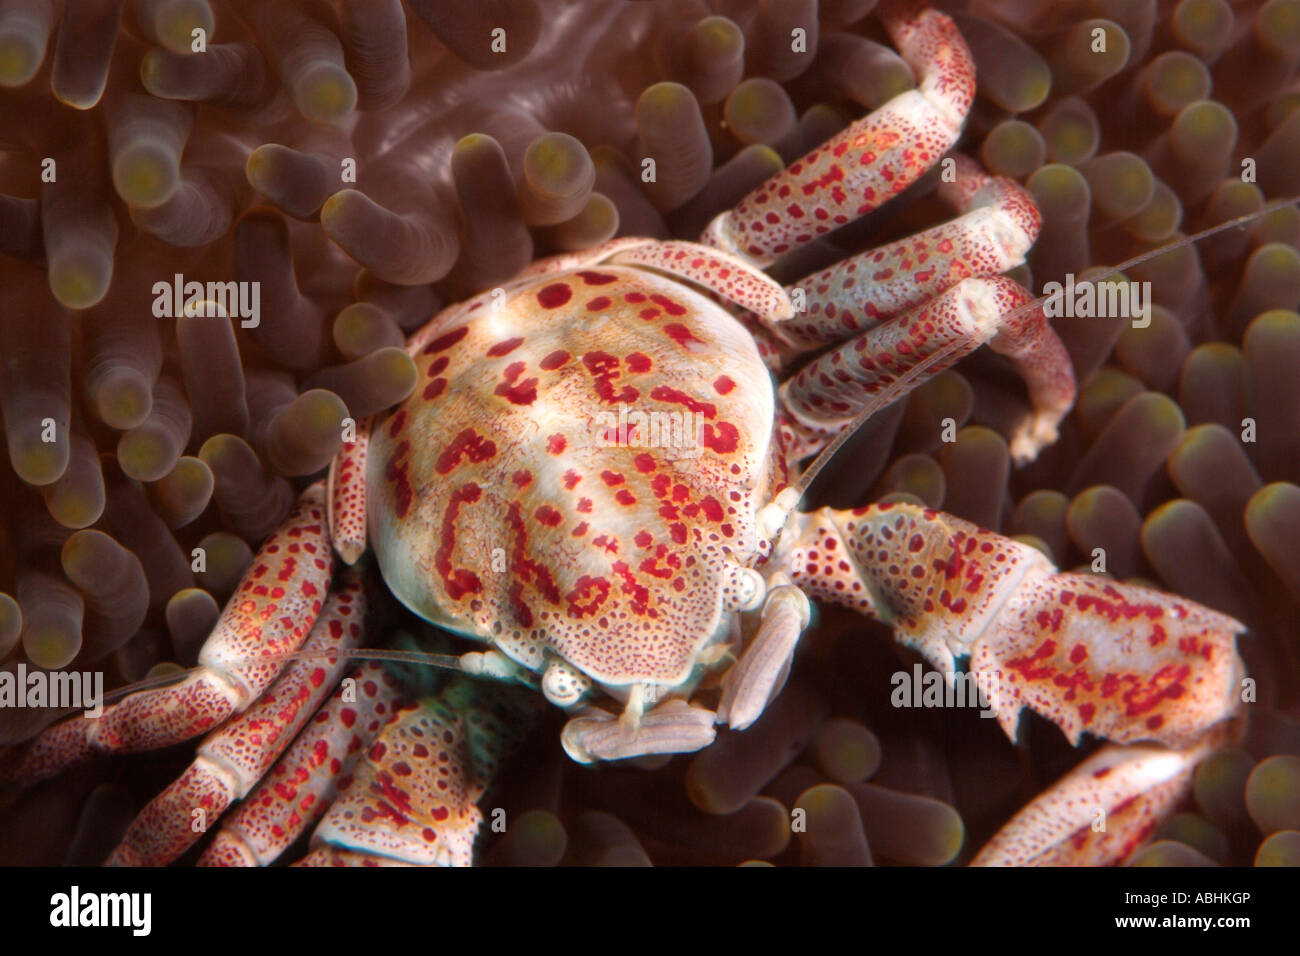 Anemone crab in Raja Ampat, Indonesia Stock Photo